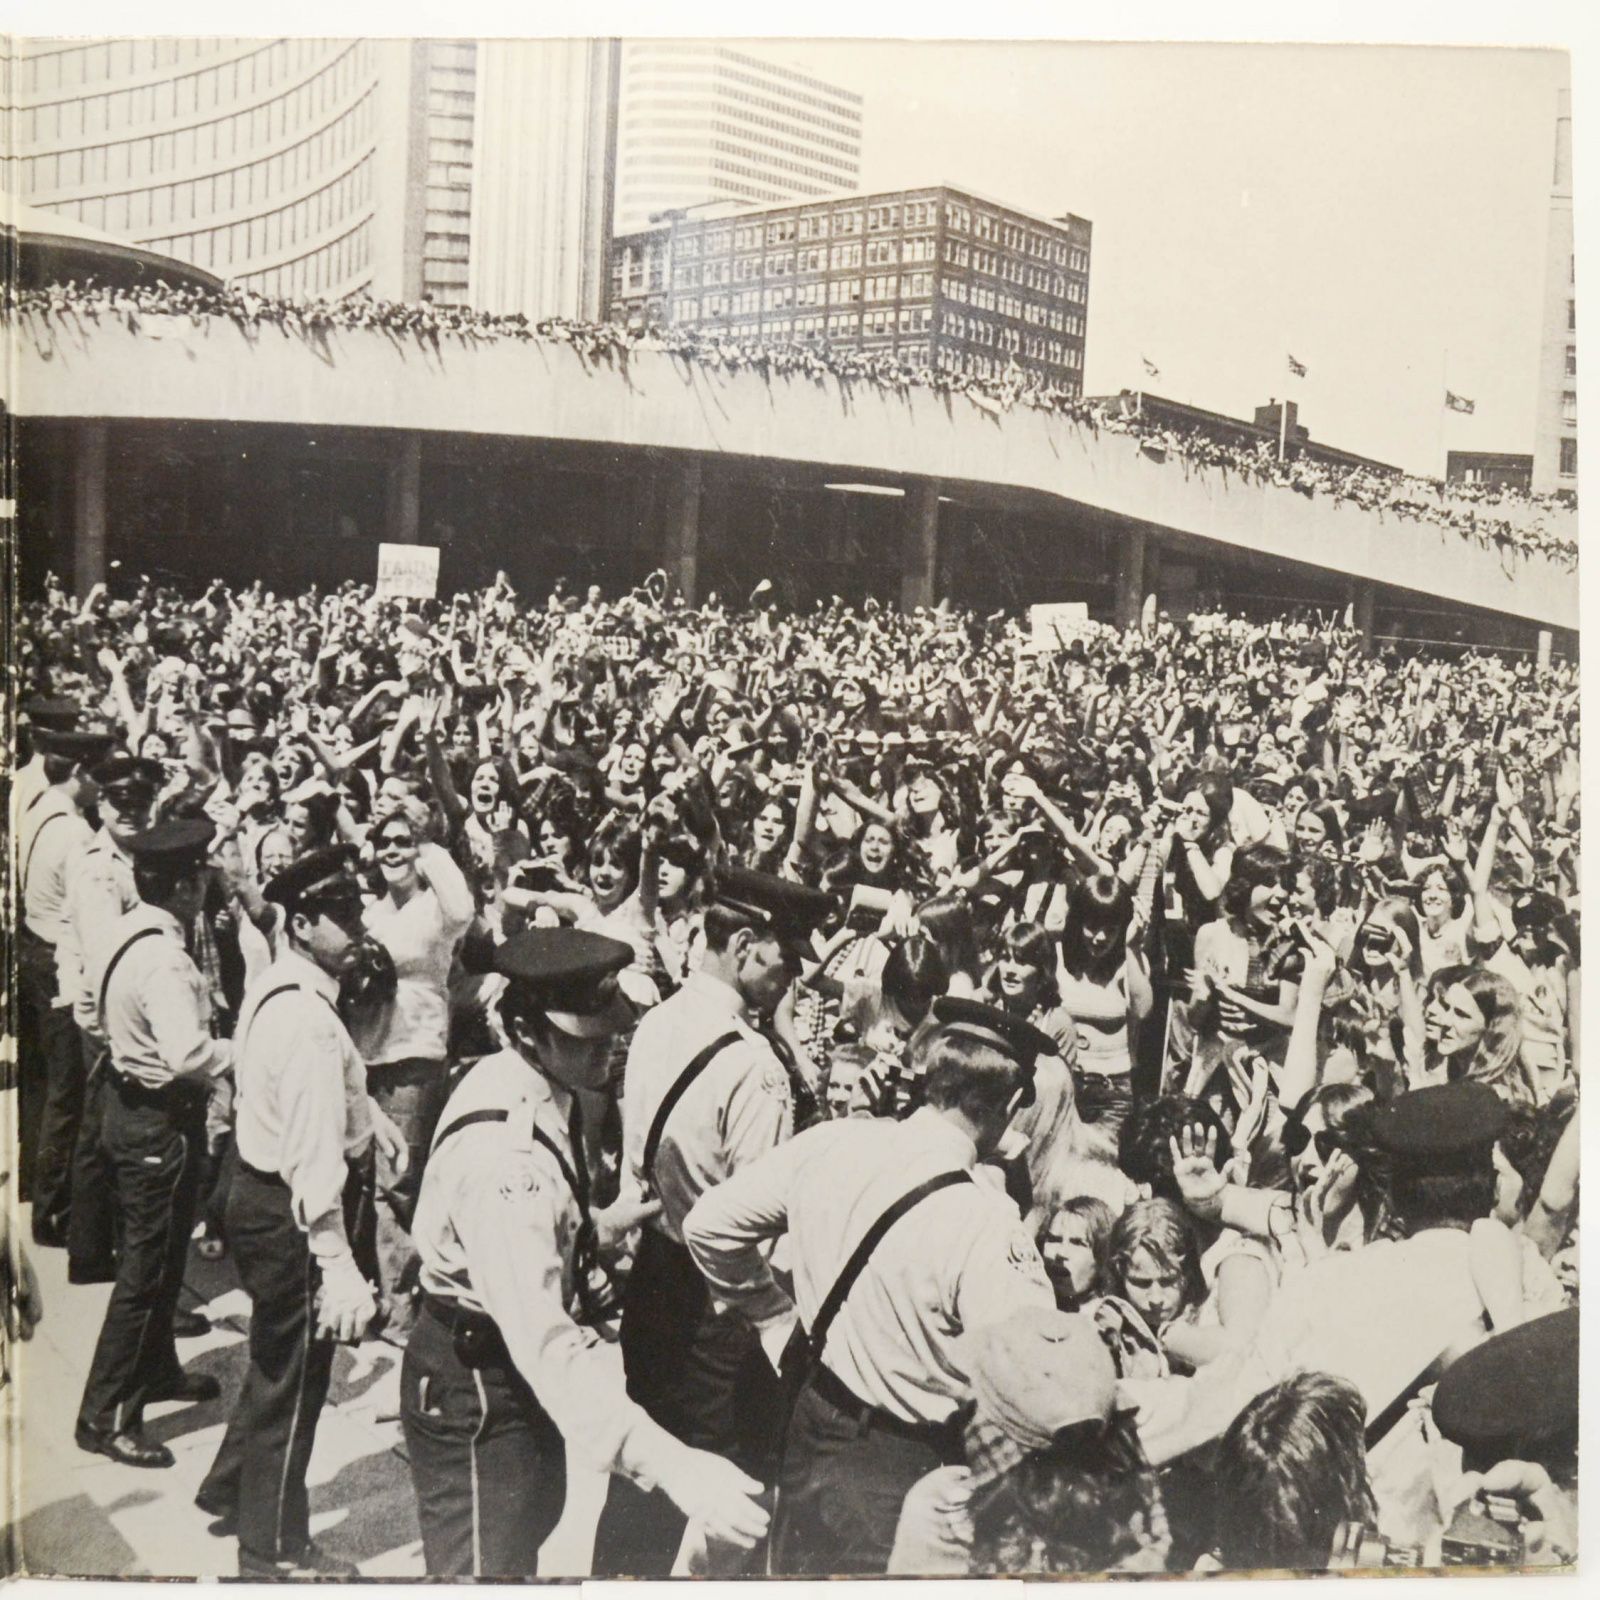 Bay City Rollers — Dedication, 1976